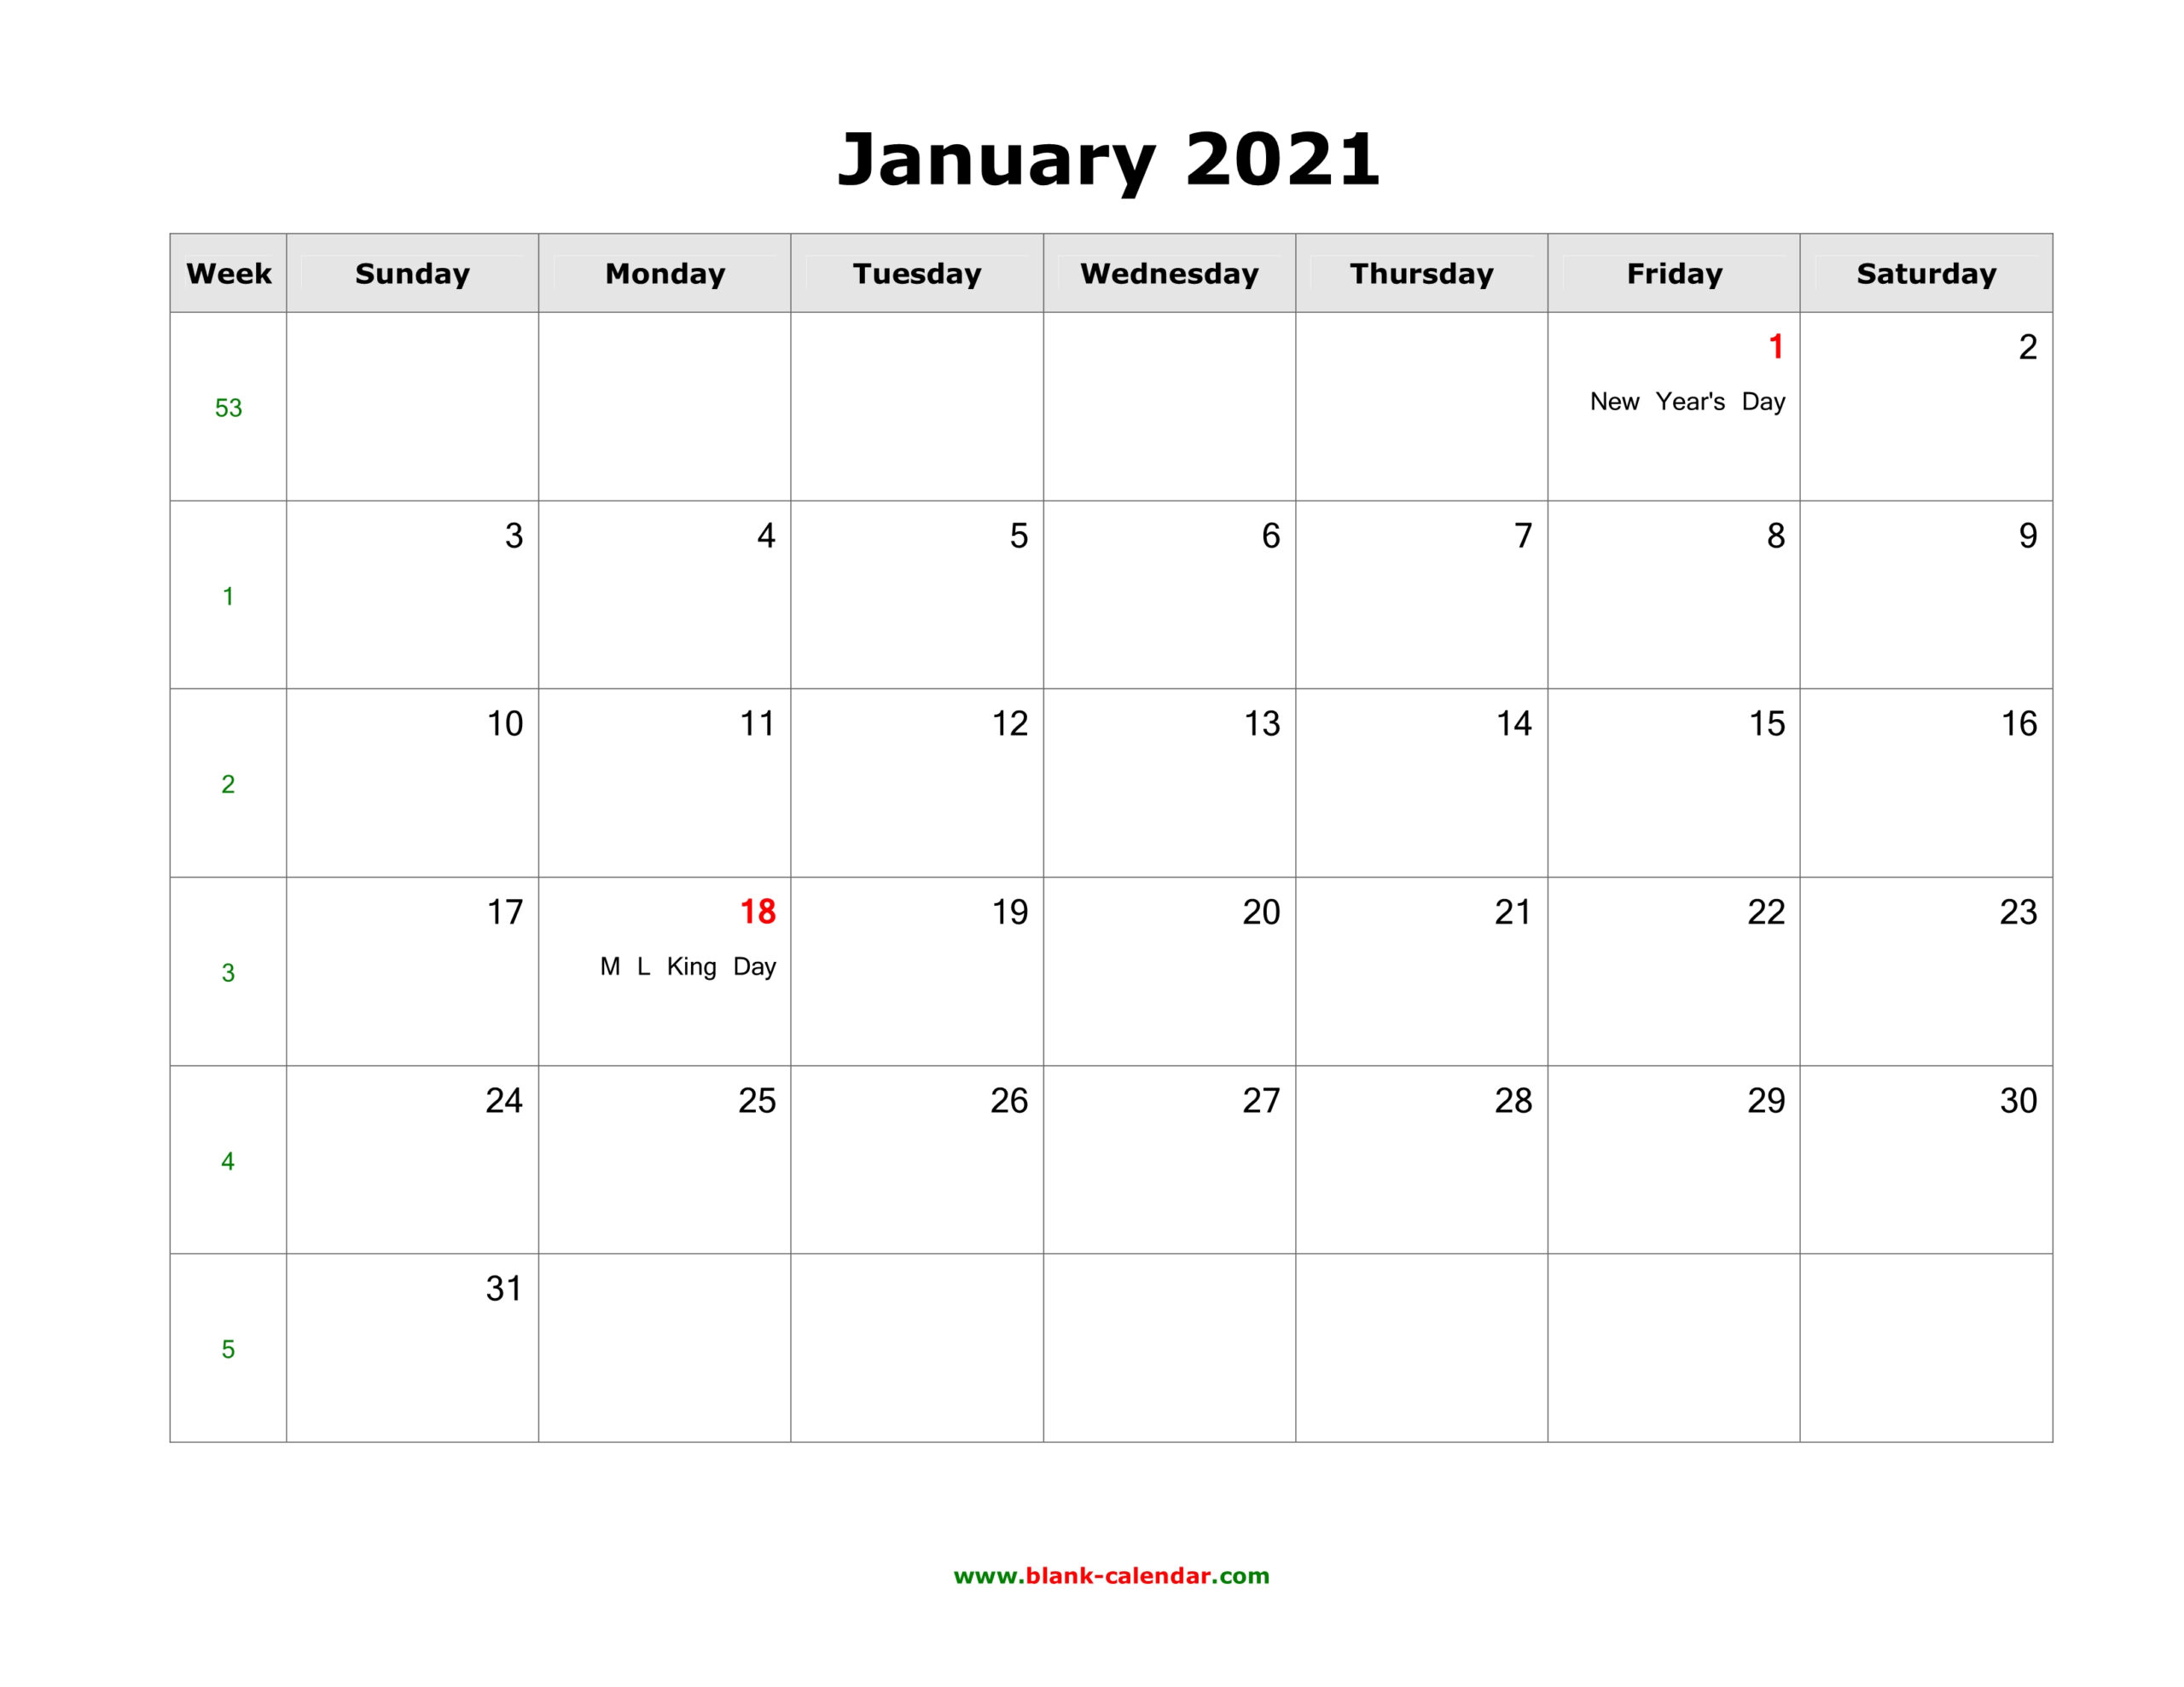 January 2021 Blank Calendar | Free Download Calendar Templates